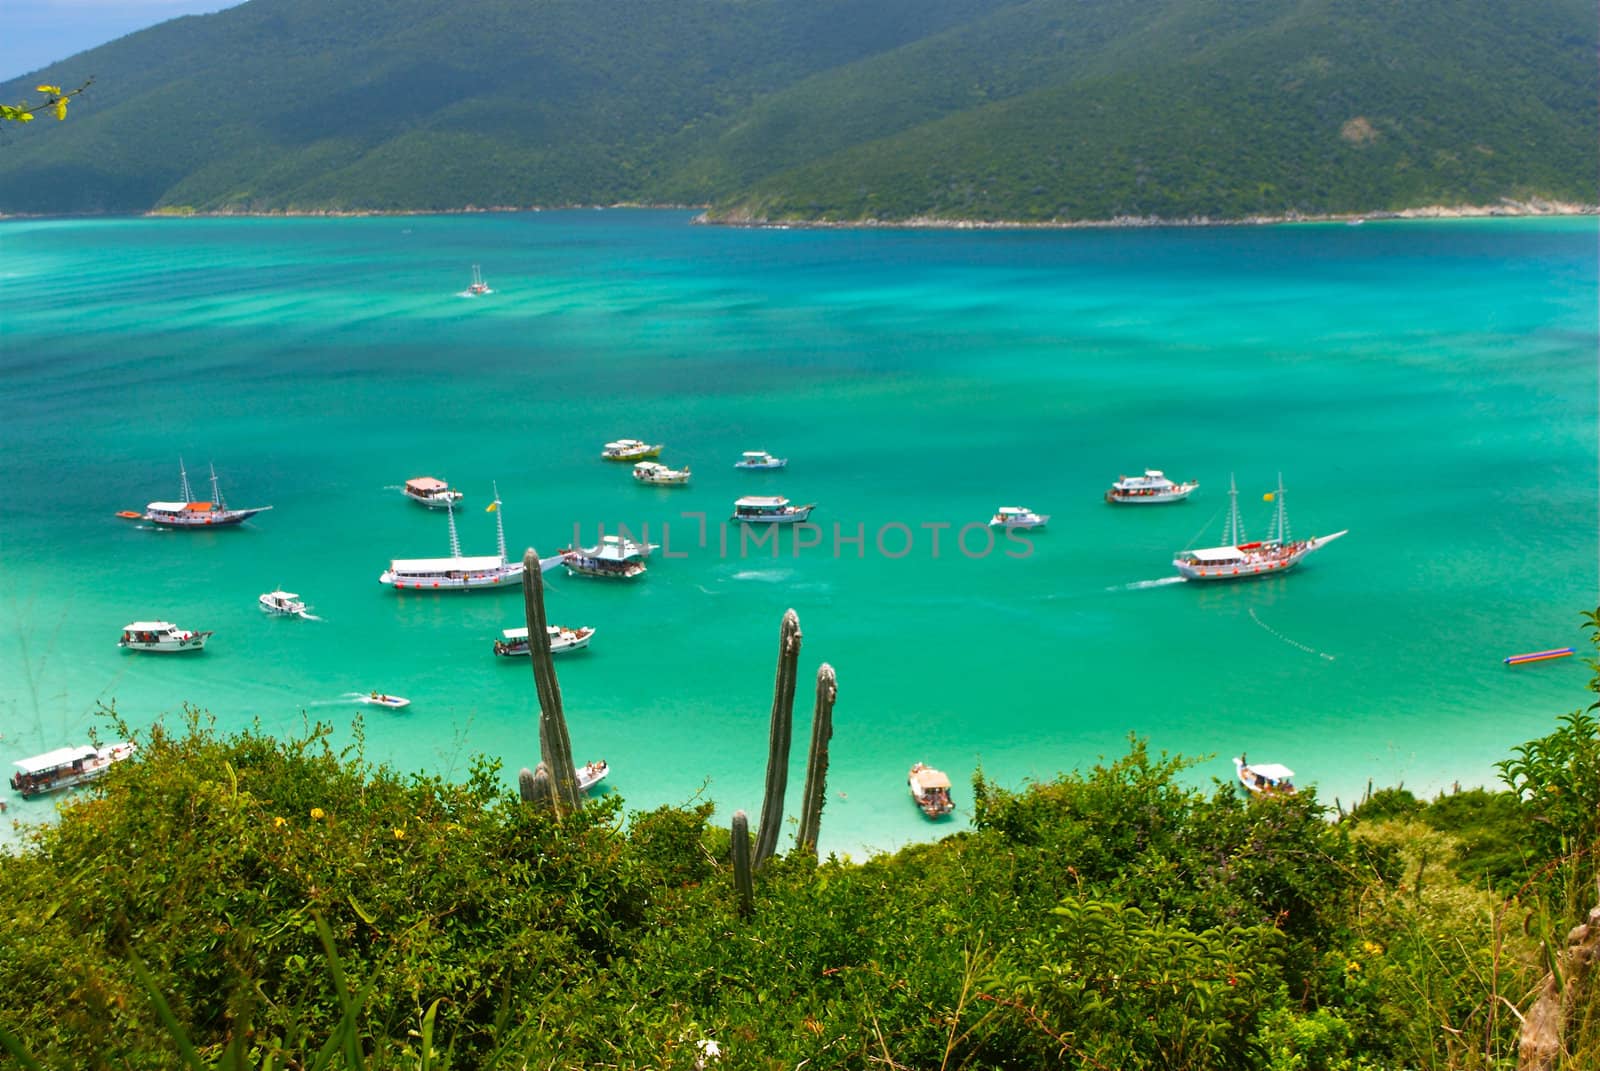 Boats over a crystalline turquoise sea in Arraial do Cabo, Rio de janeiro, Brazil by eldervs